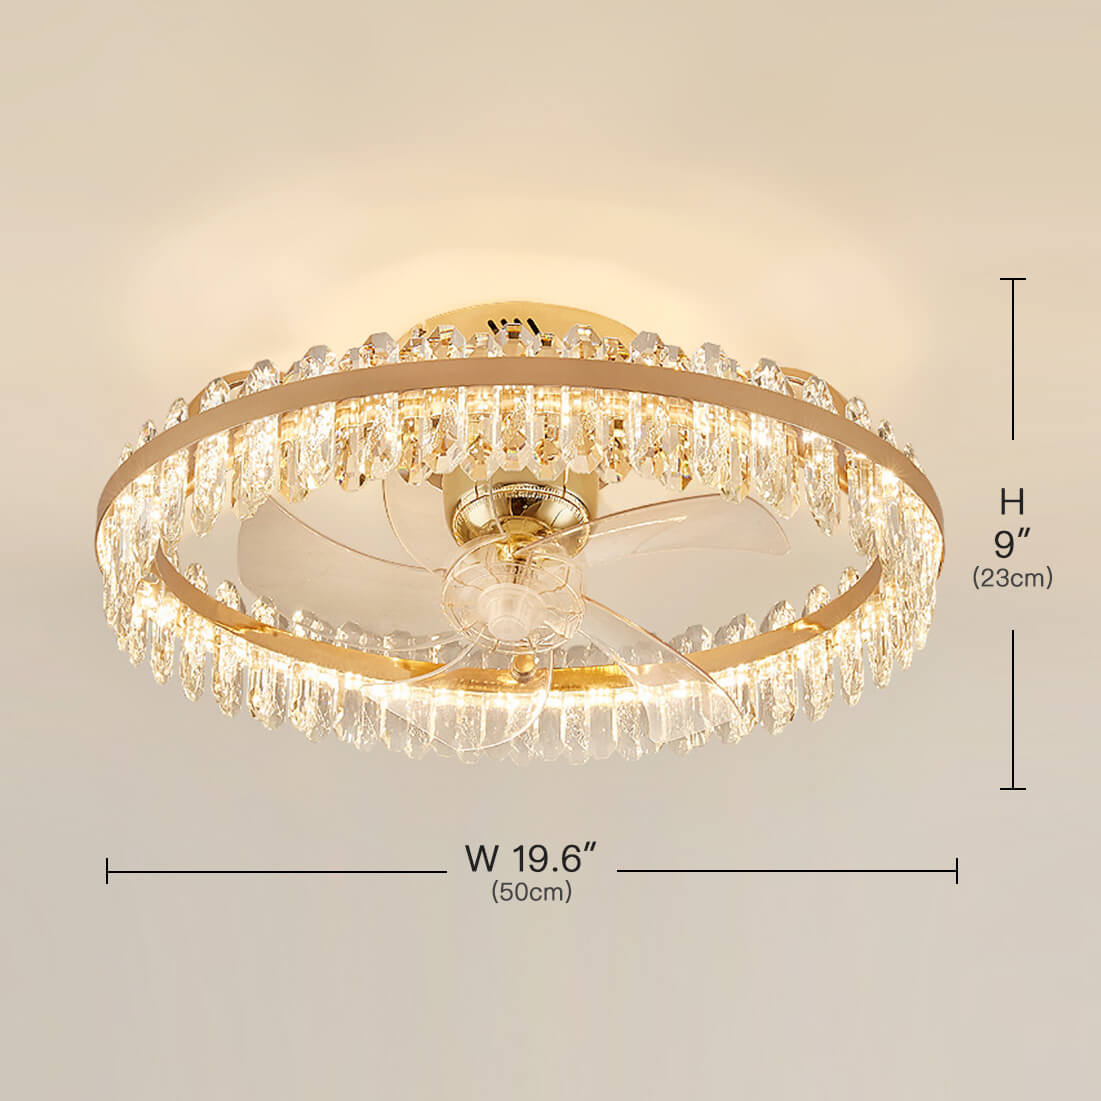 Crystal Ceiling Fan Oscillating Ceiling Fan Light size | Sofary Lighting